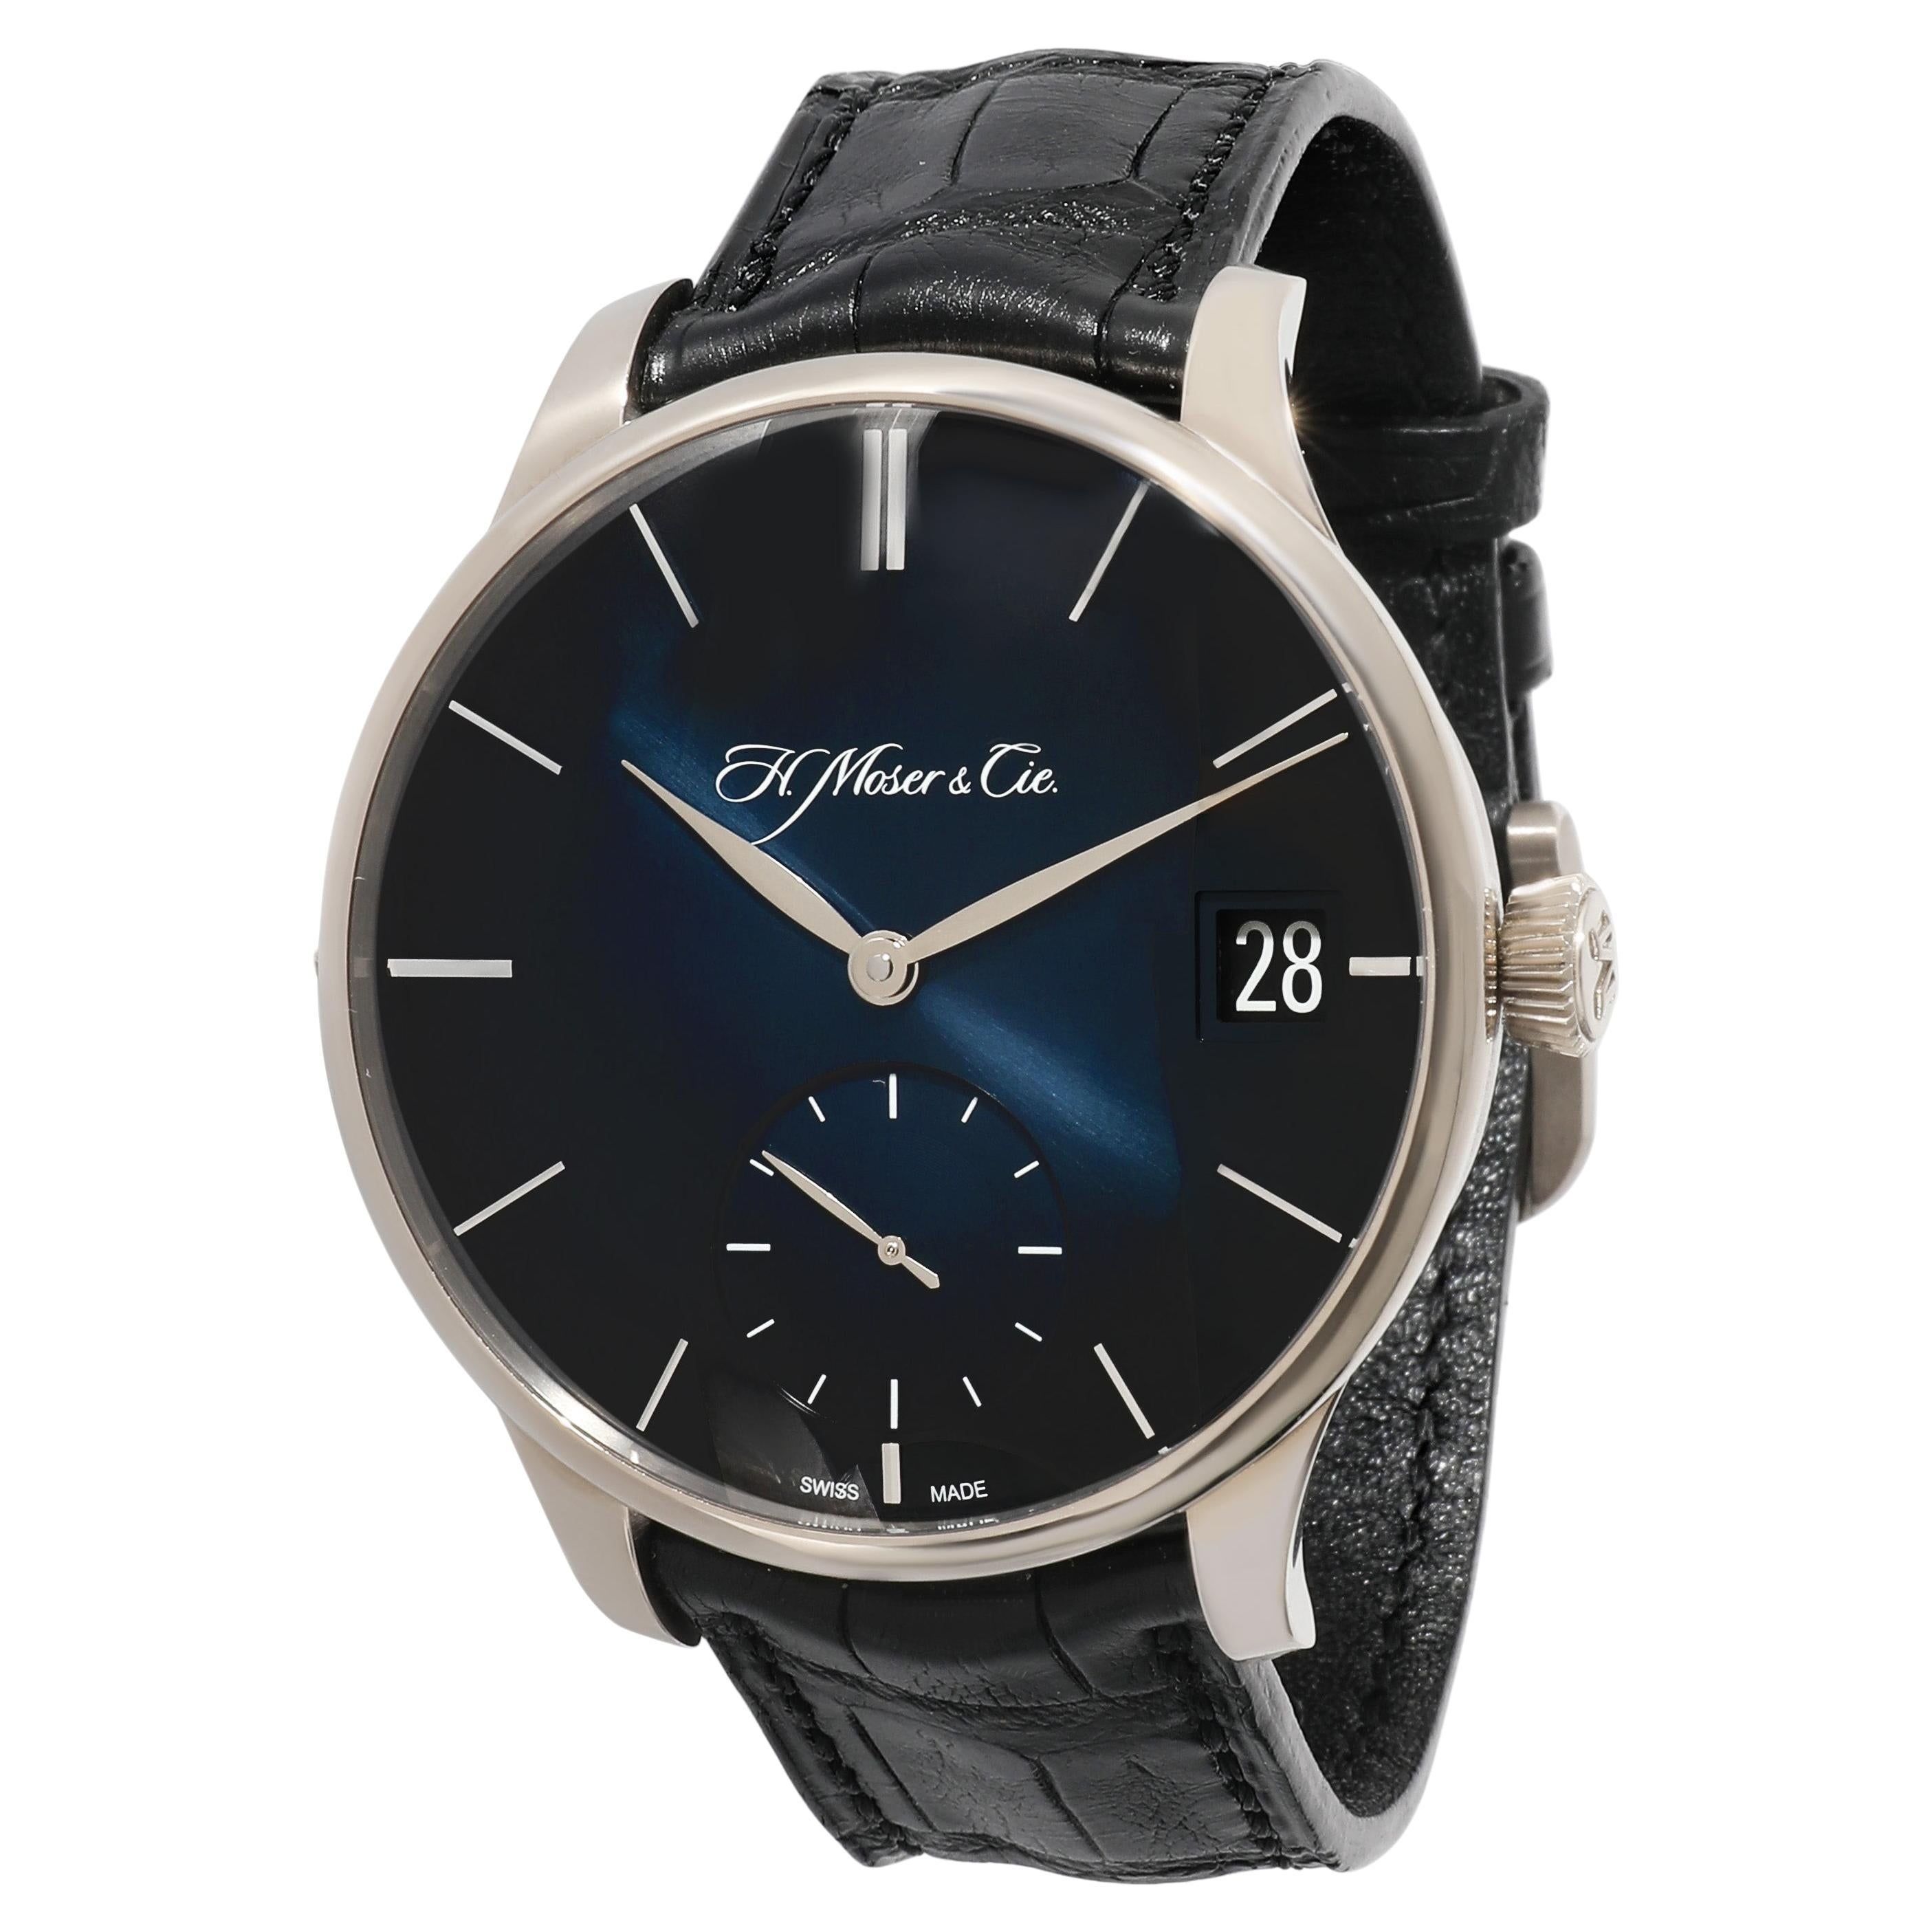 H. Moser & Cie. Venturer Big Date 2100-0202 Men's Watch in 18kt White Gold For Sale